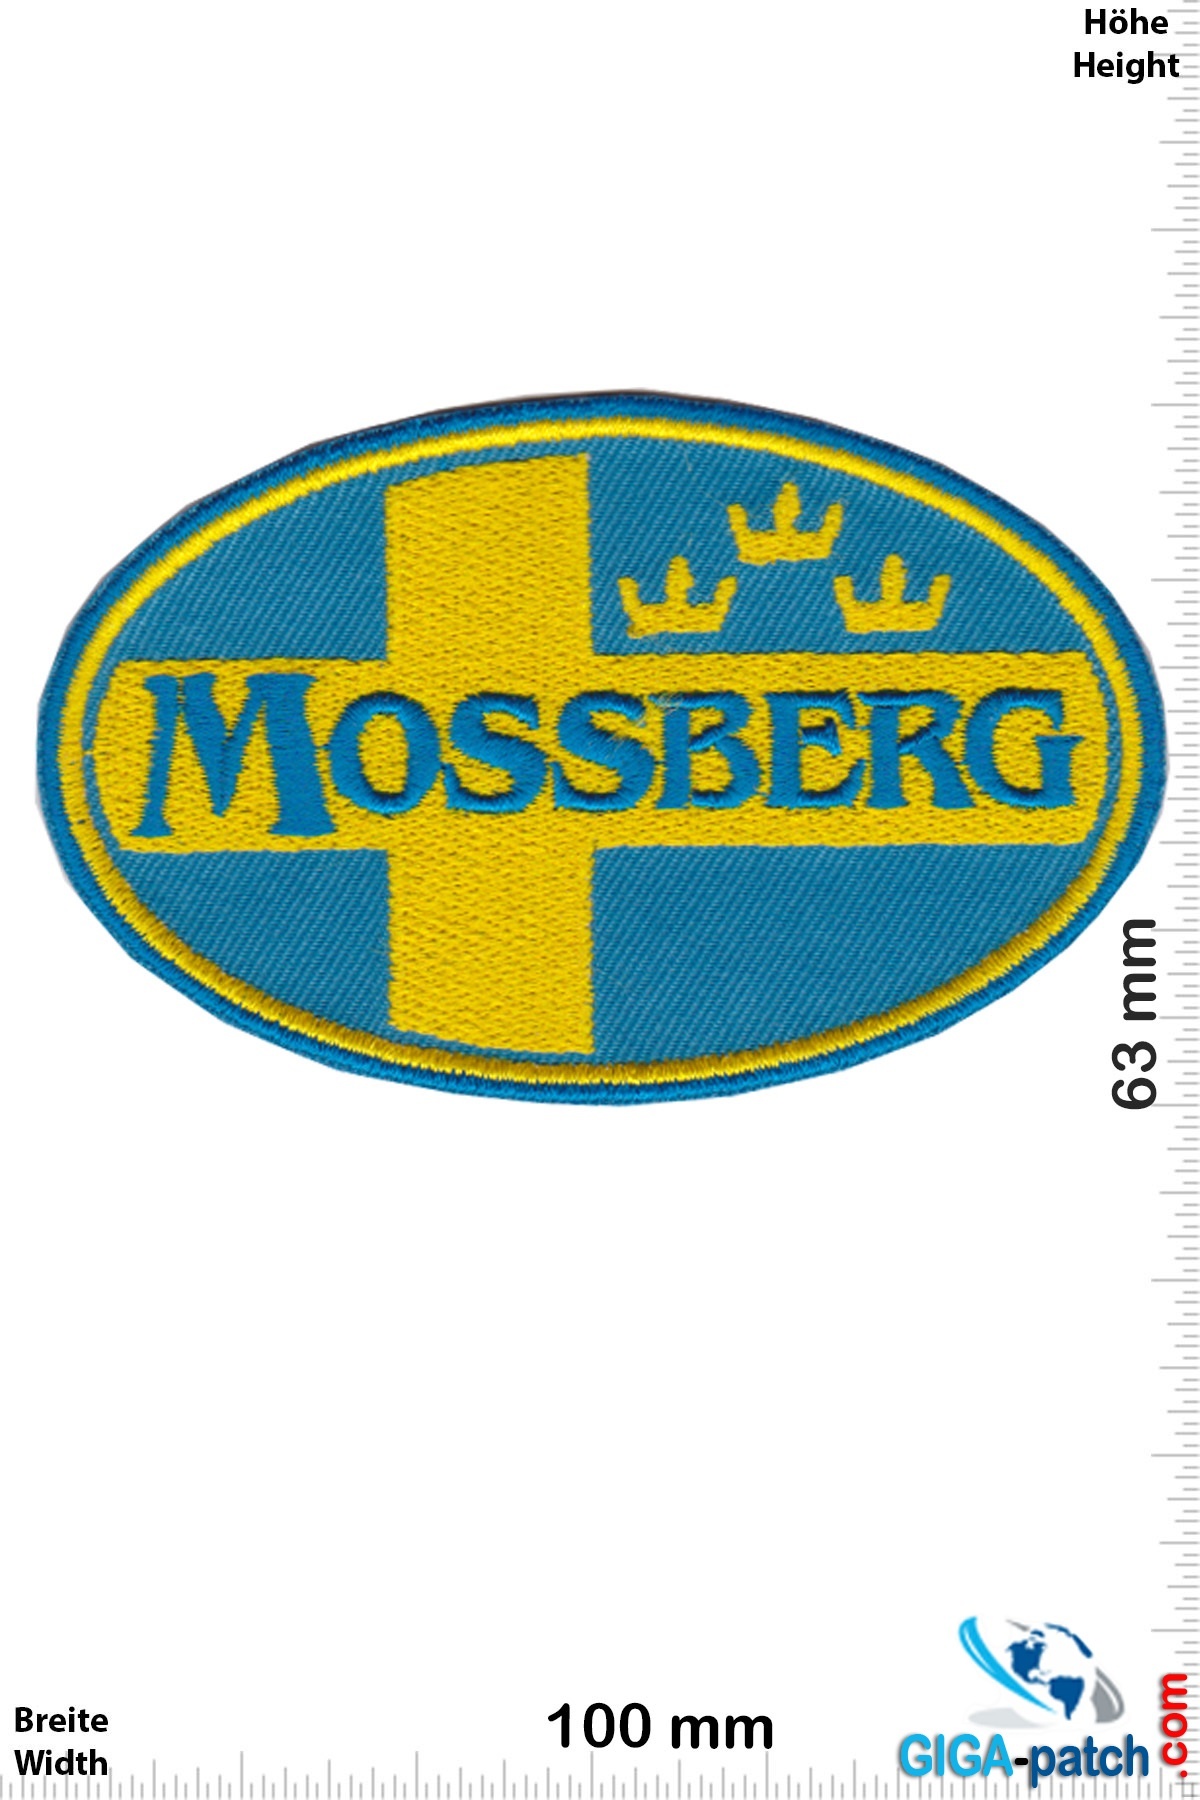 O.F. Mossberg & Sons